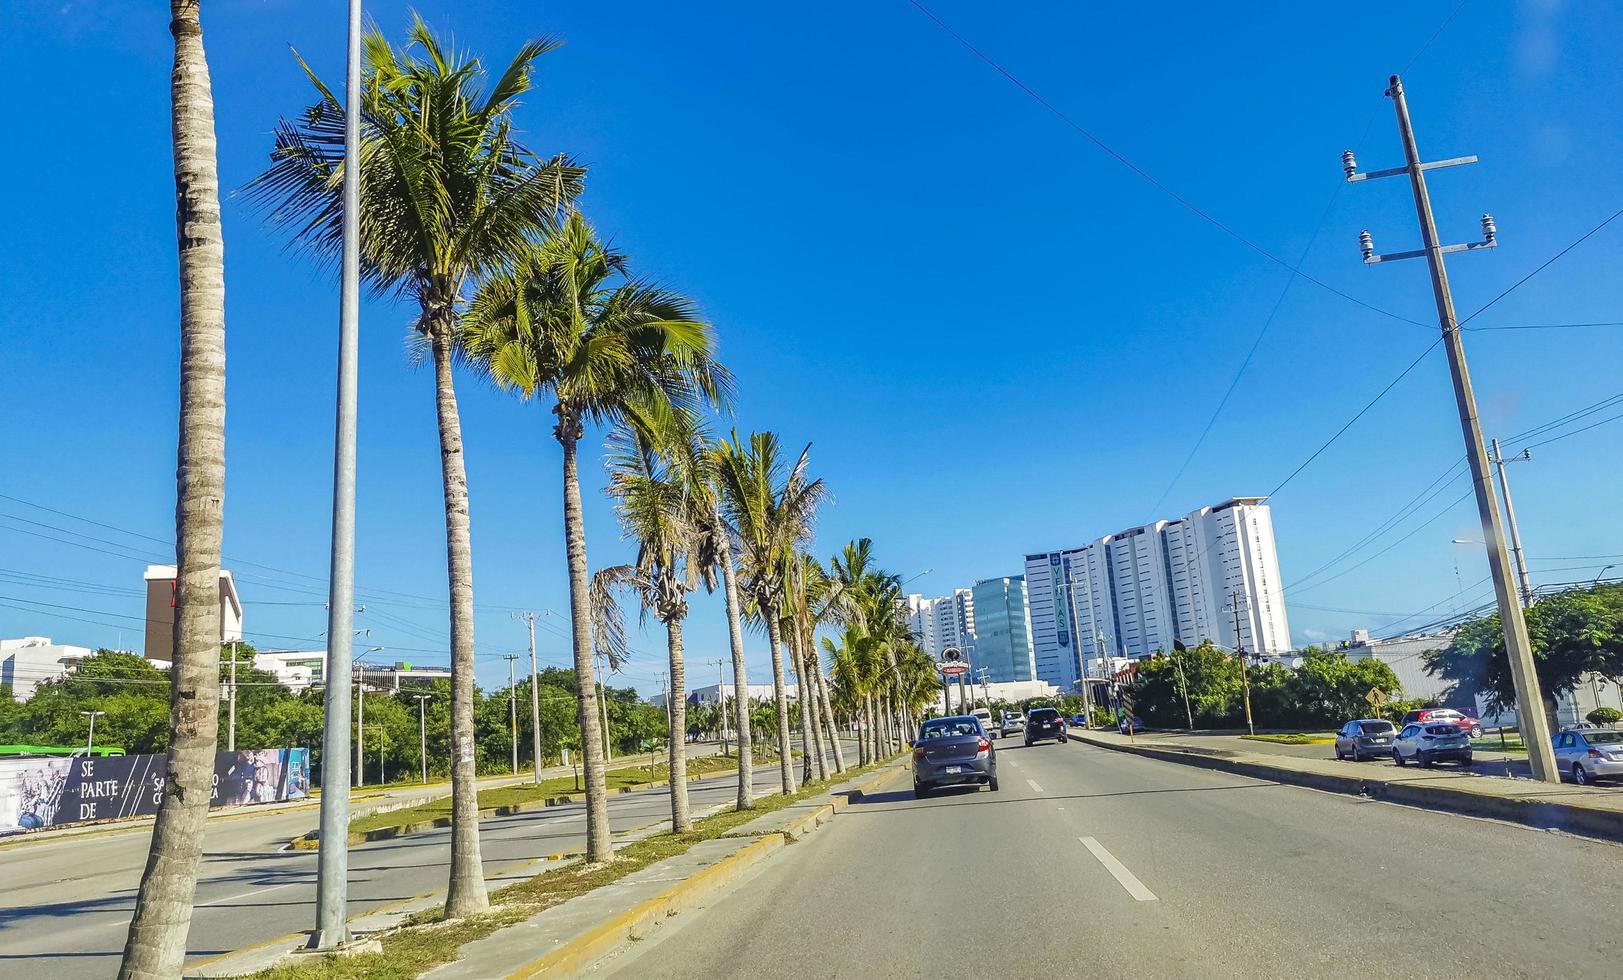 cancun quintana roo méxico 2022 edifícios típicos de carros de rua e paisagem urbana de cancun méxico. foto